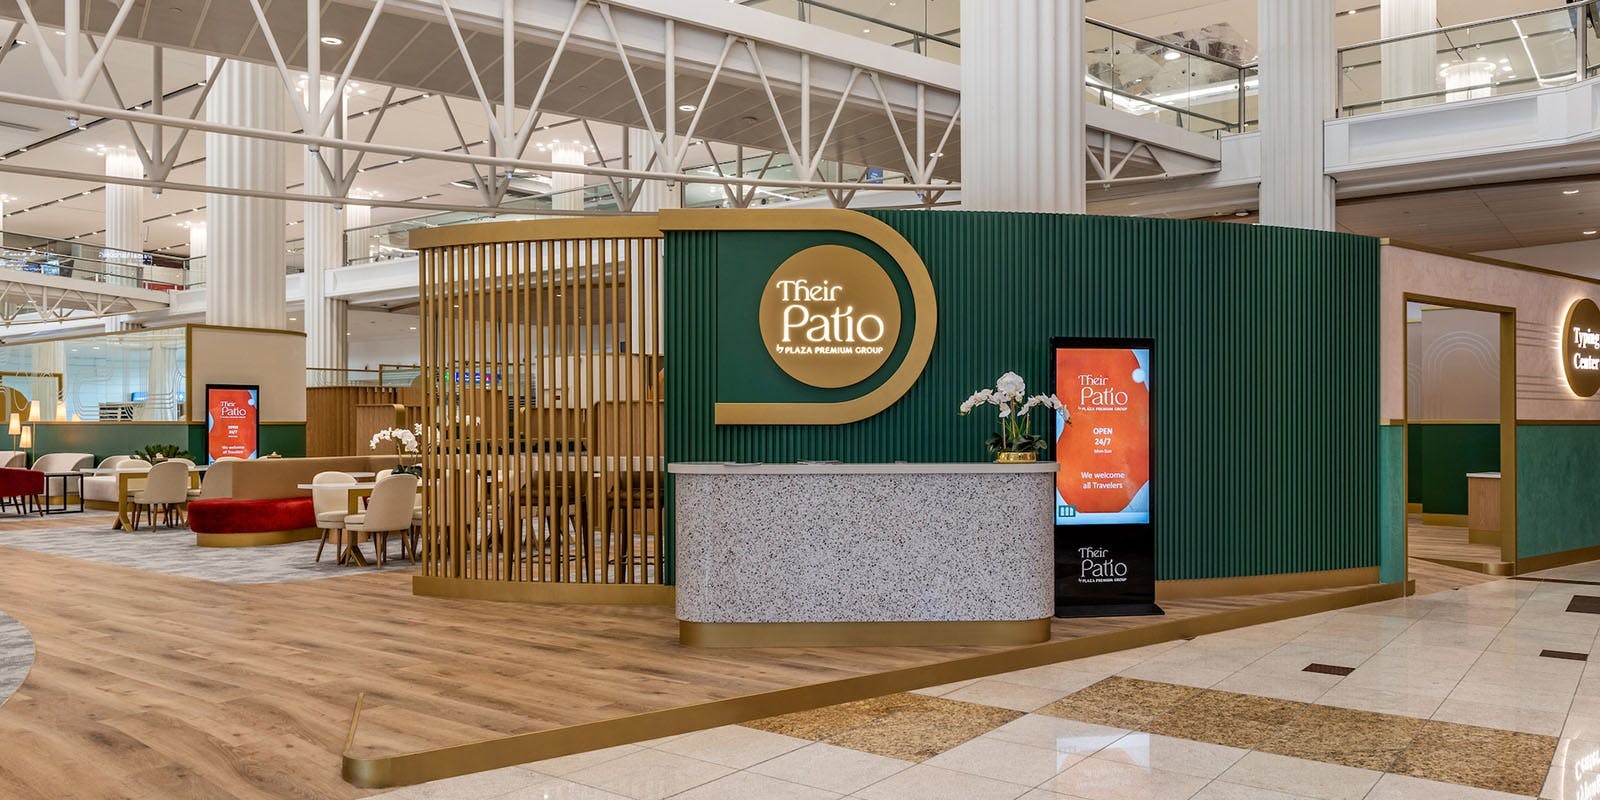 Dubai International Airport (Arrivals) Their Patio by Plaza Premium Group tickets